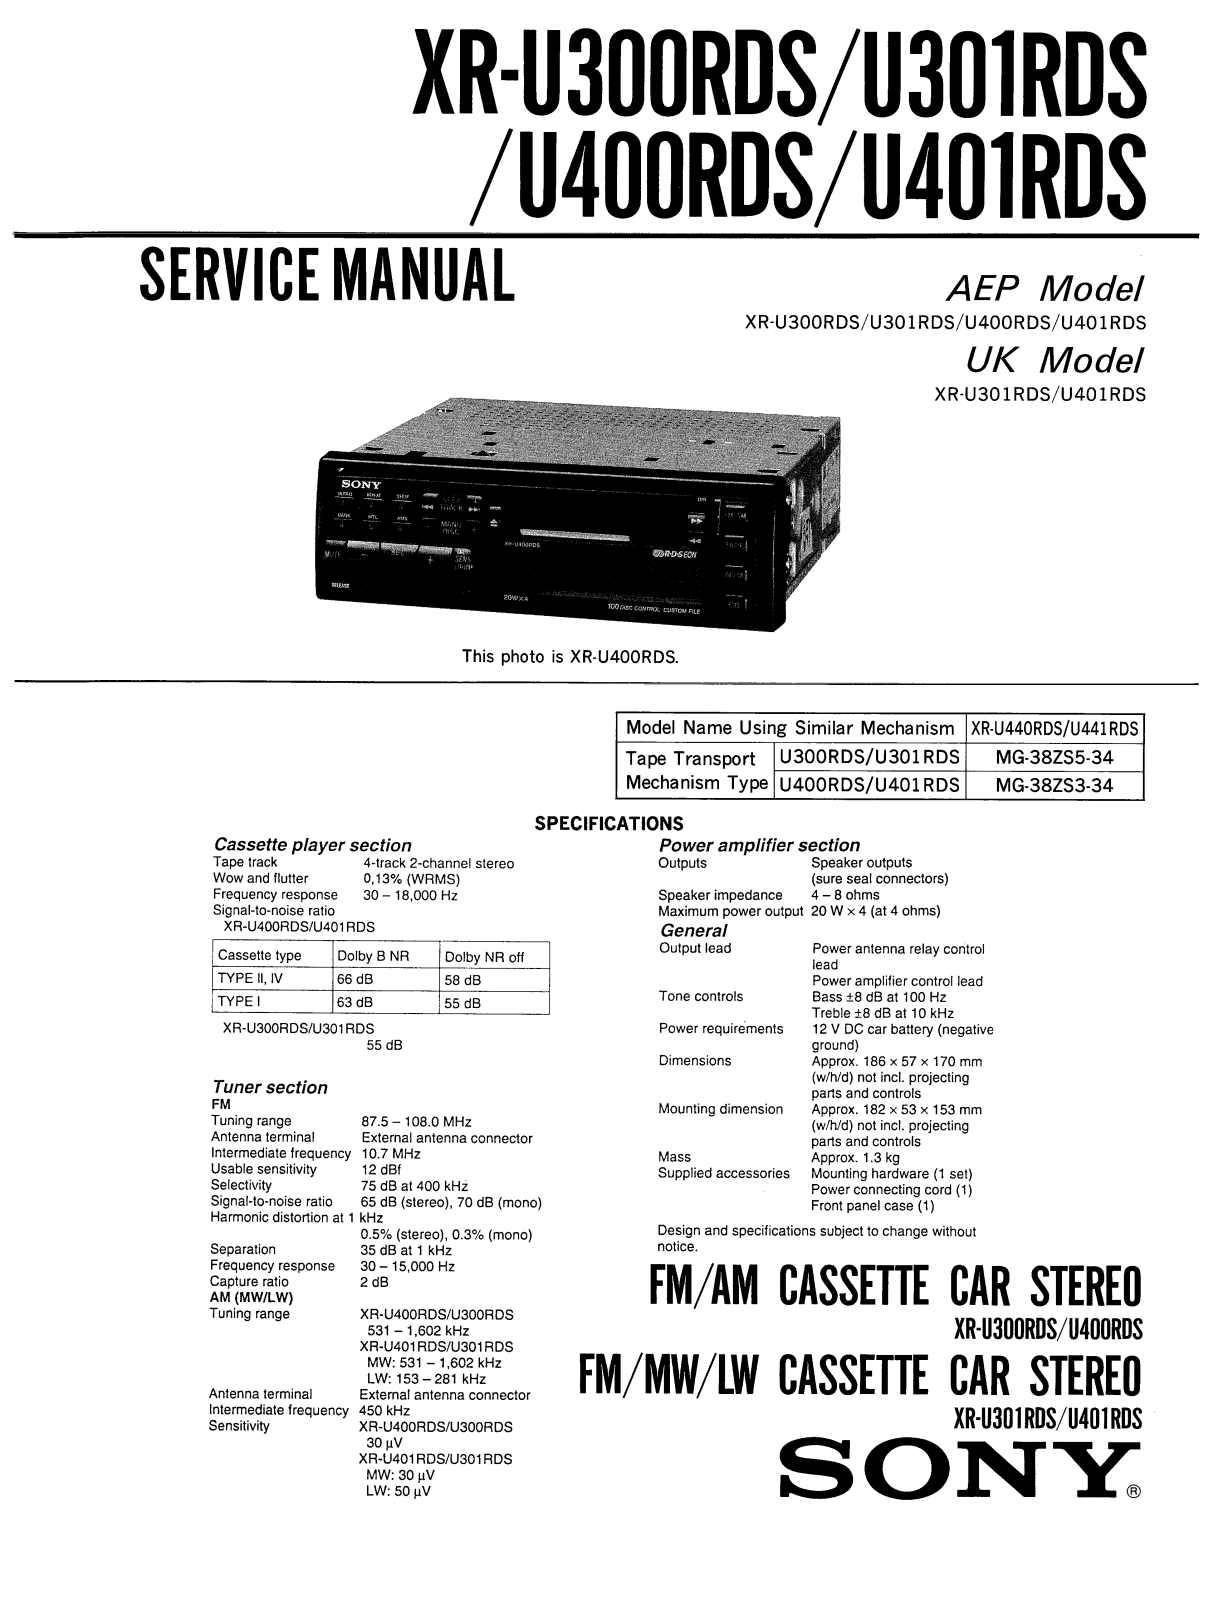 Sony XR-U300RDS, XR-U301RDS, XR-U400RDS, XR-U401RDS Service Manual